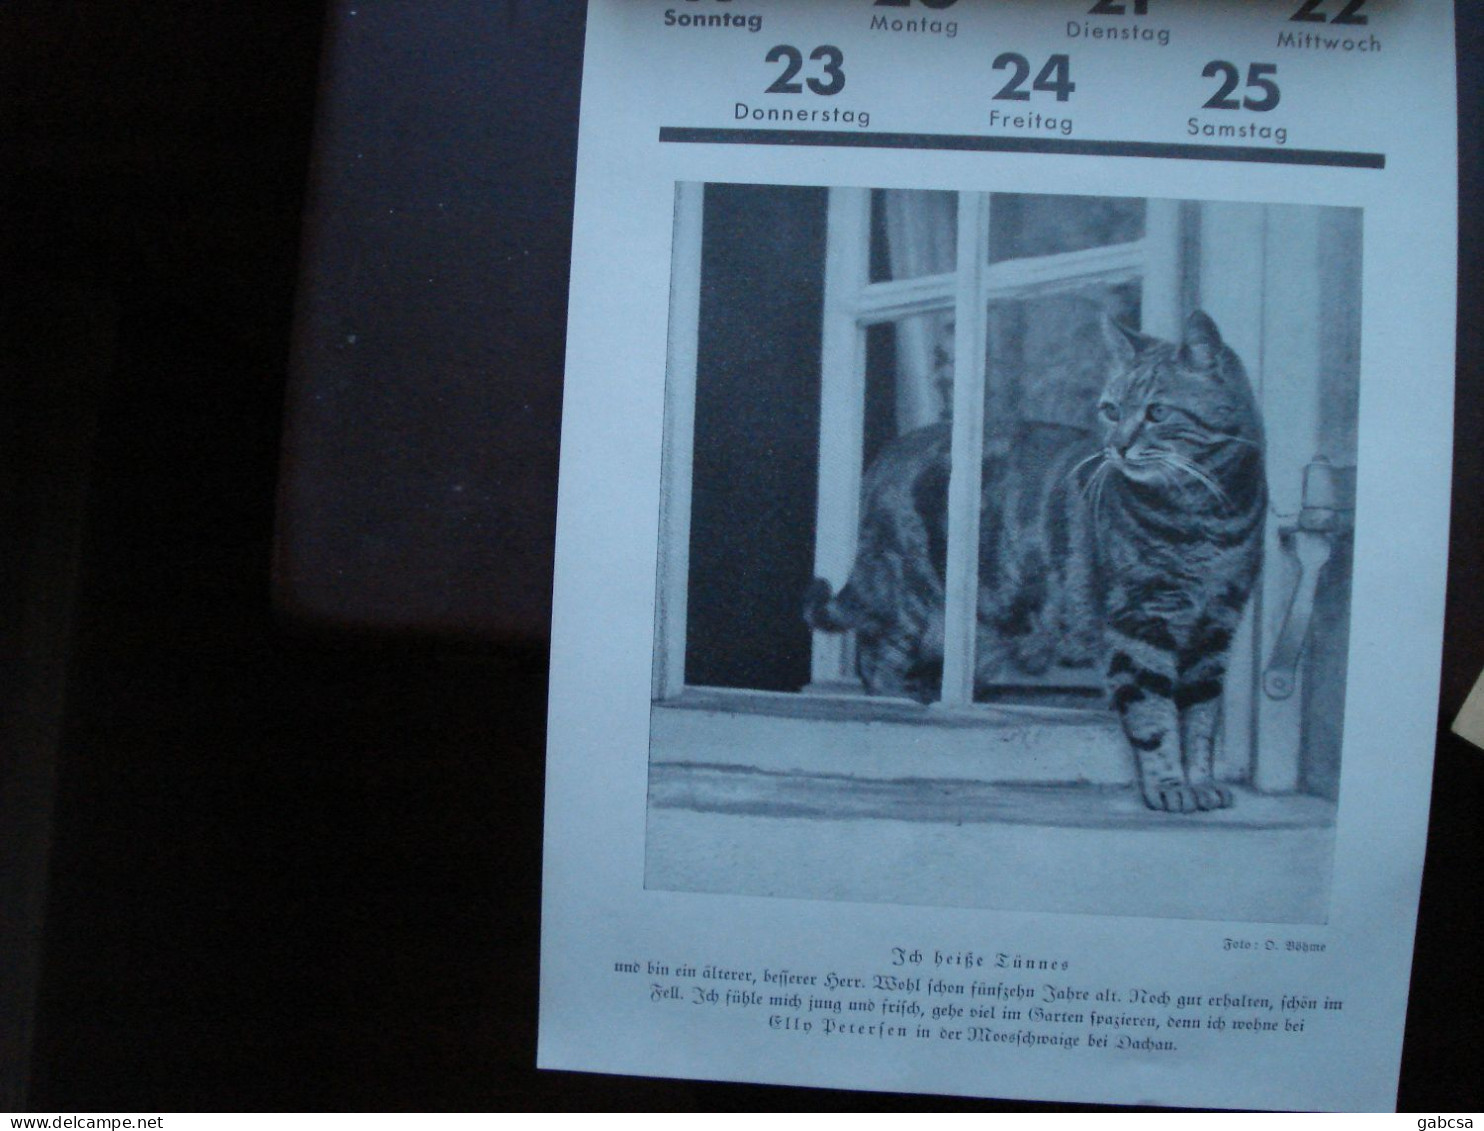 Elly Petersen Hunde und Katzen 1932 Kalendar